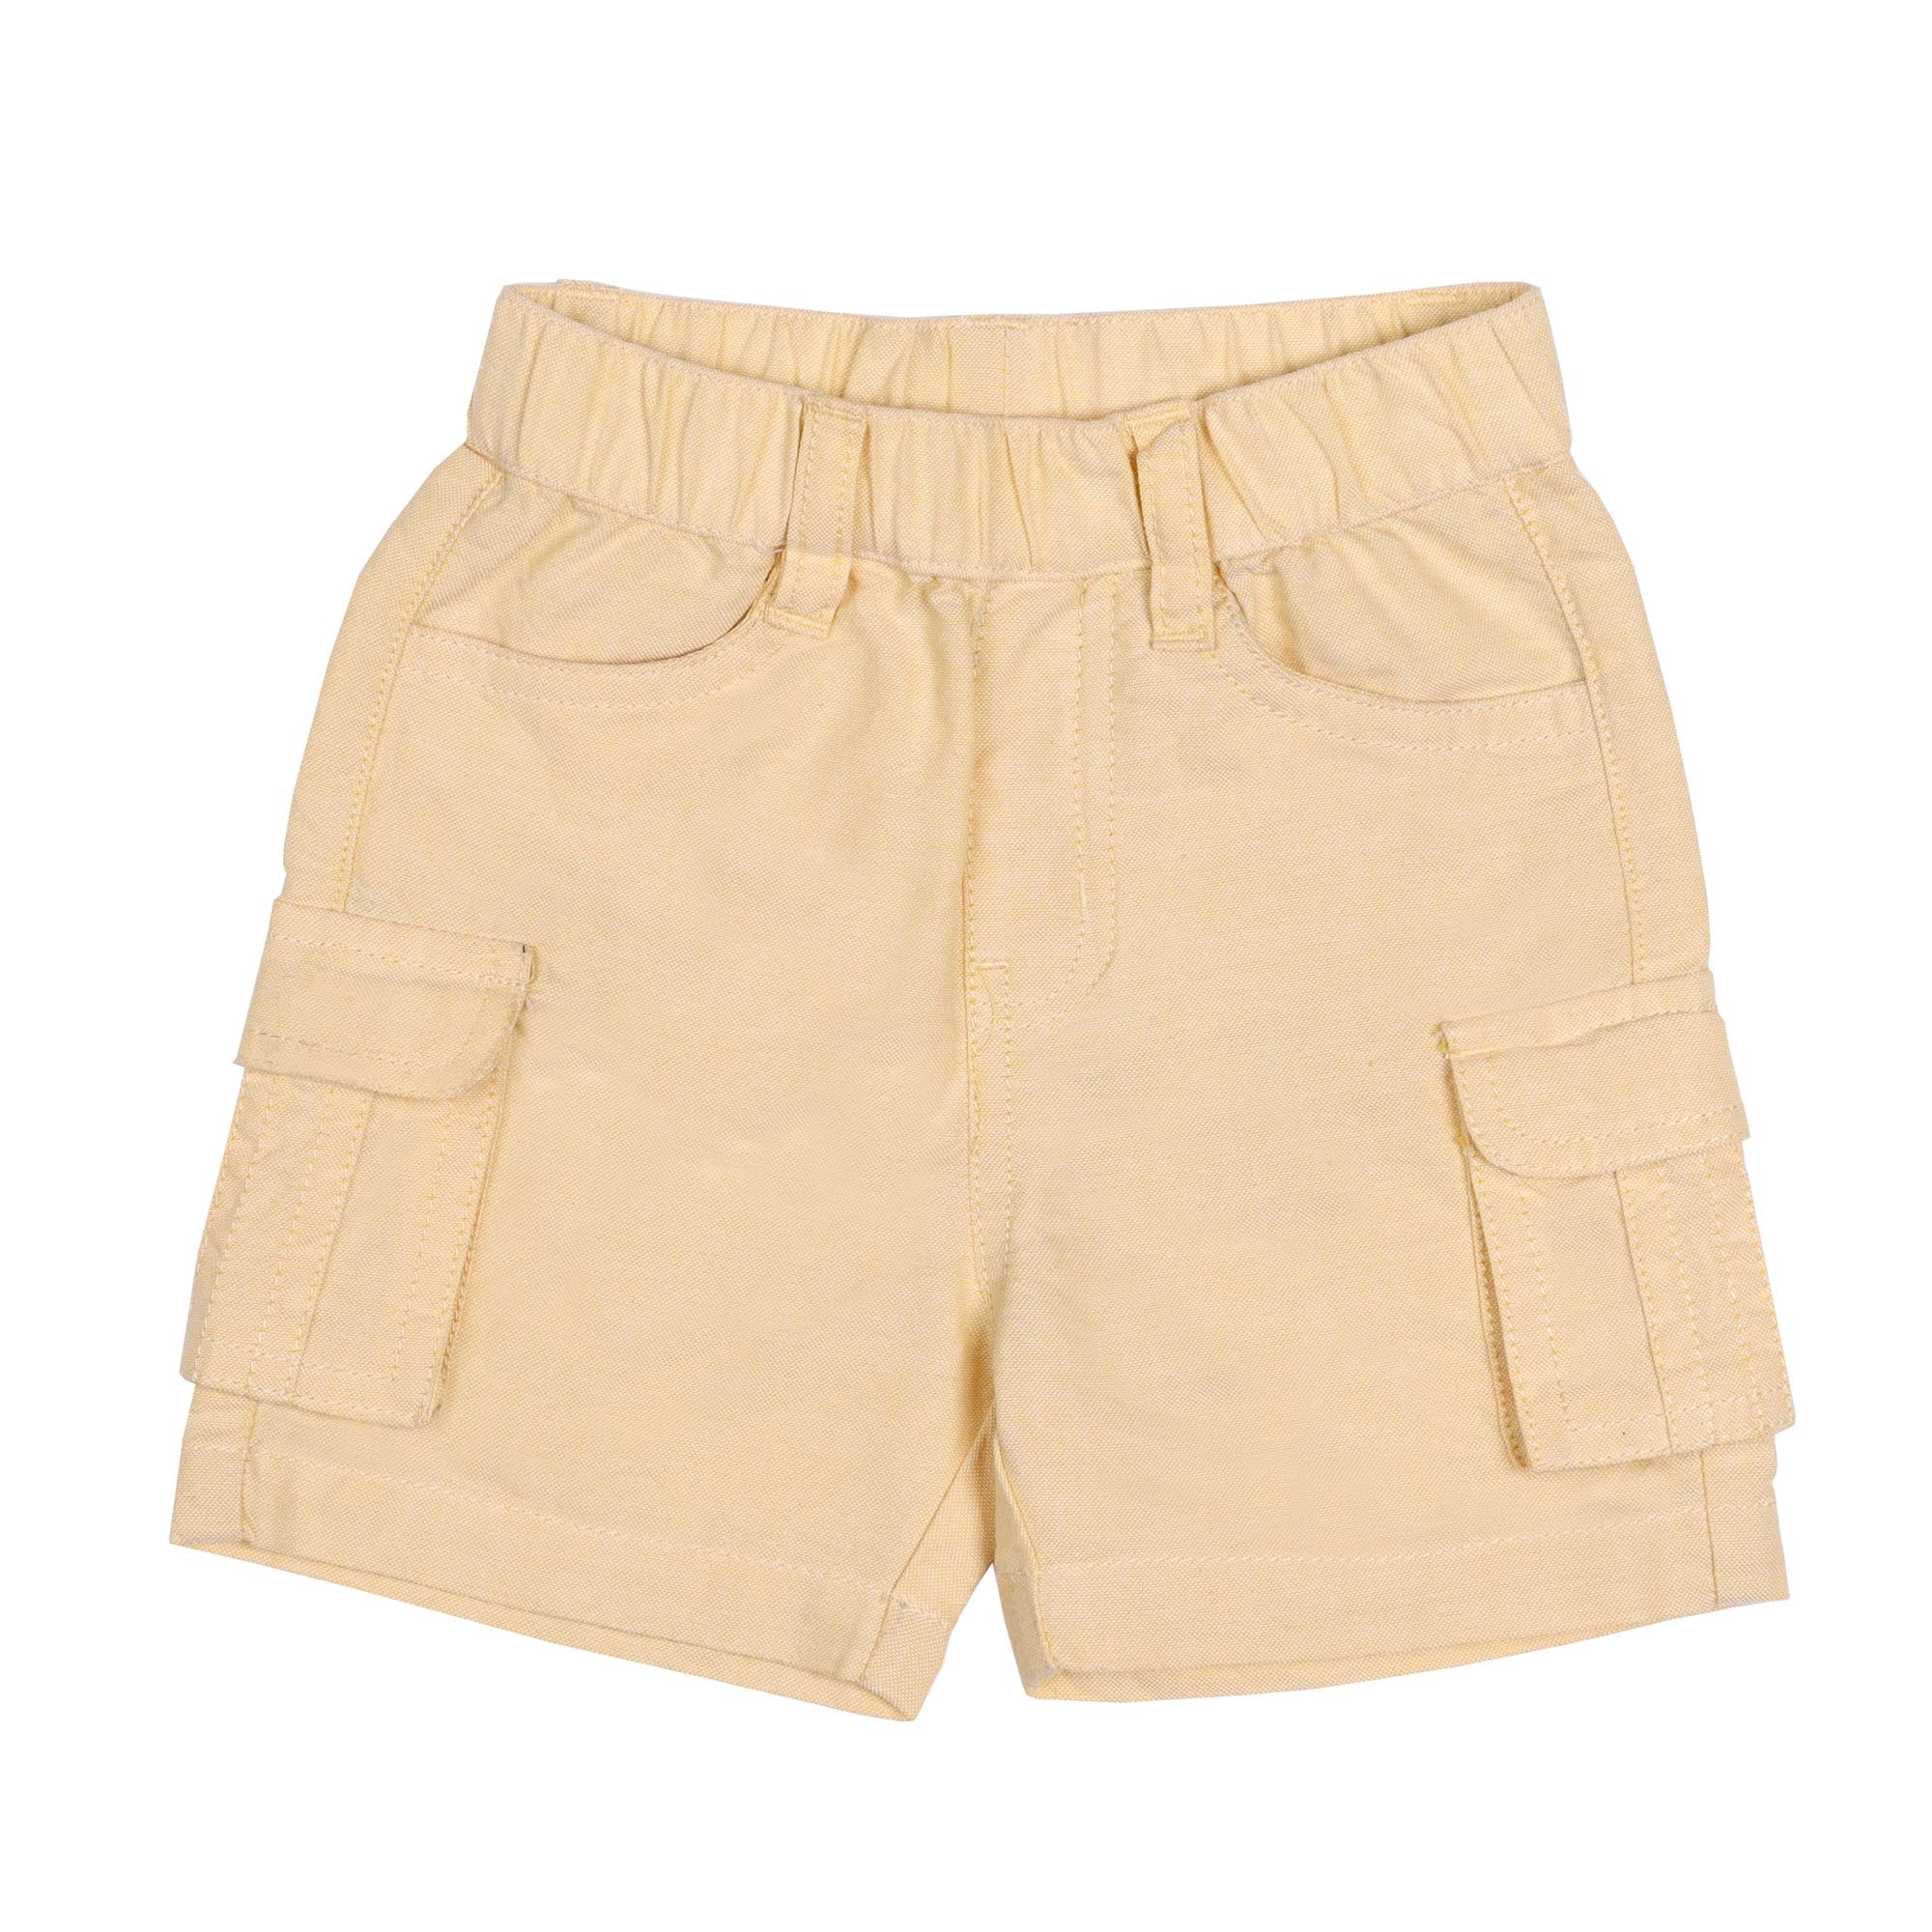 Adventure Time Boys Shorts & Shirt Set (3-24M)